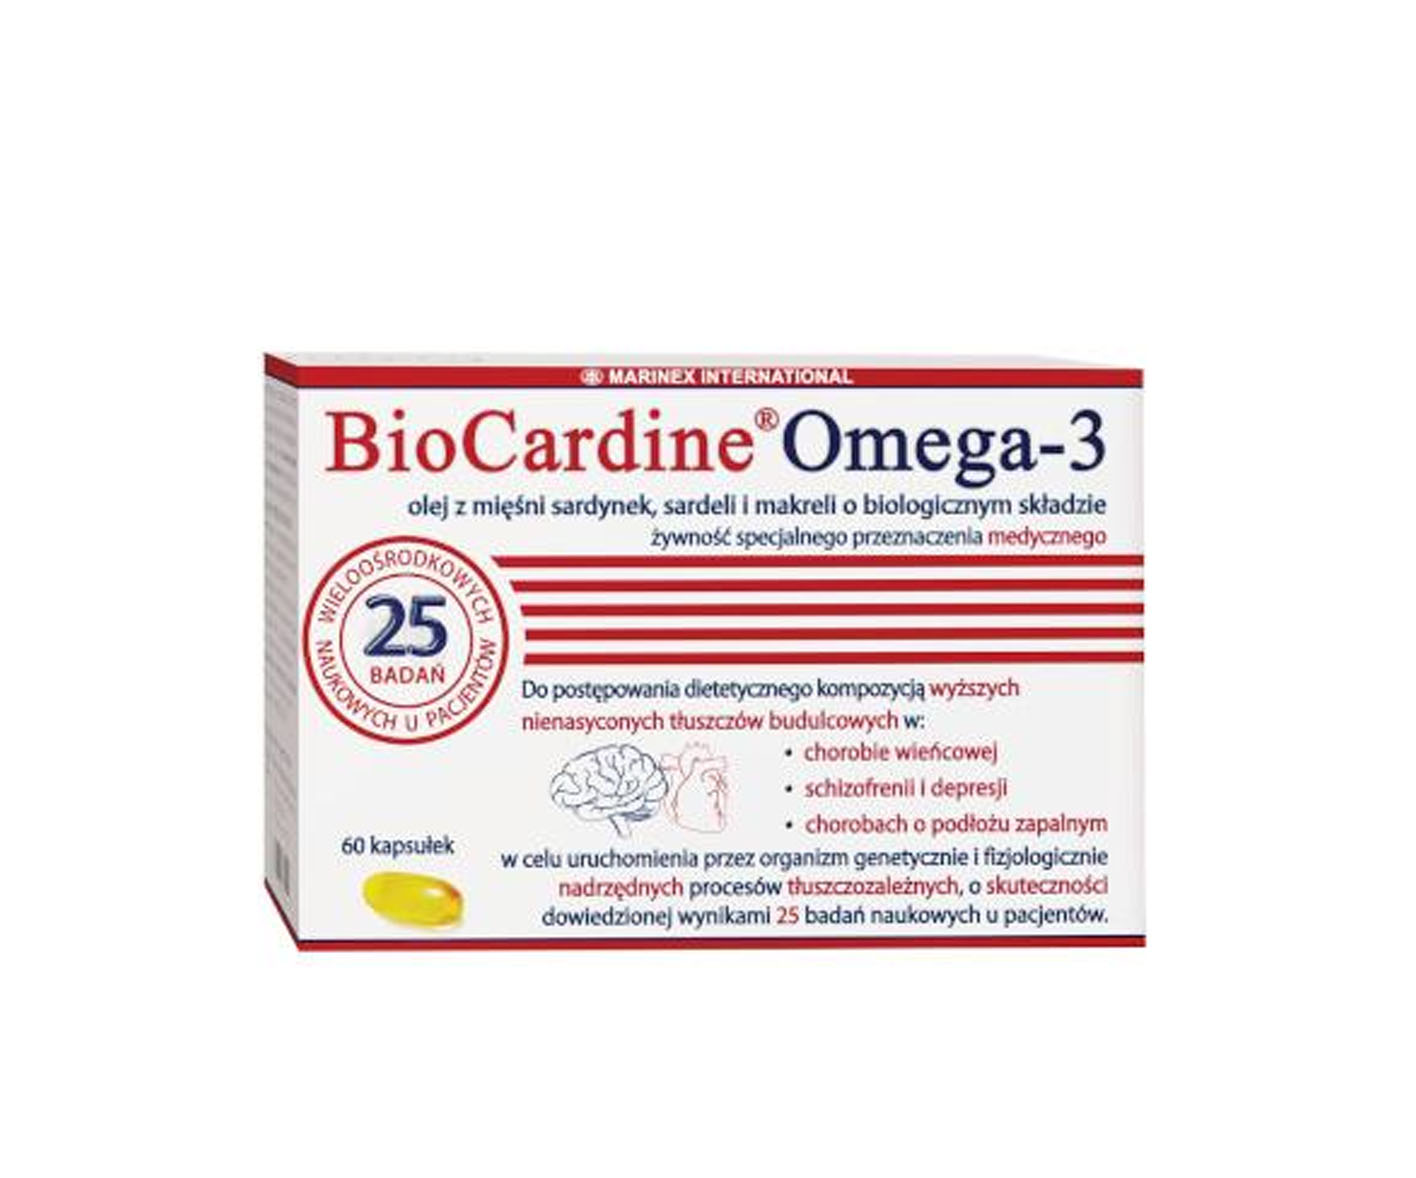 Marinex, Biocardine Omega-3, suplement diety, 60 kapsułek